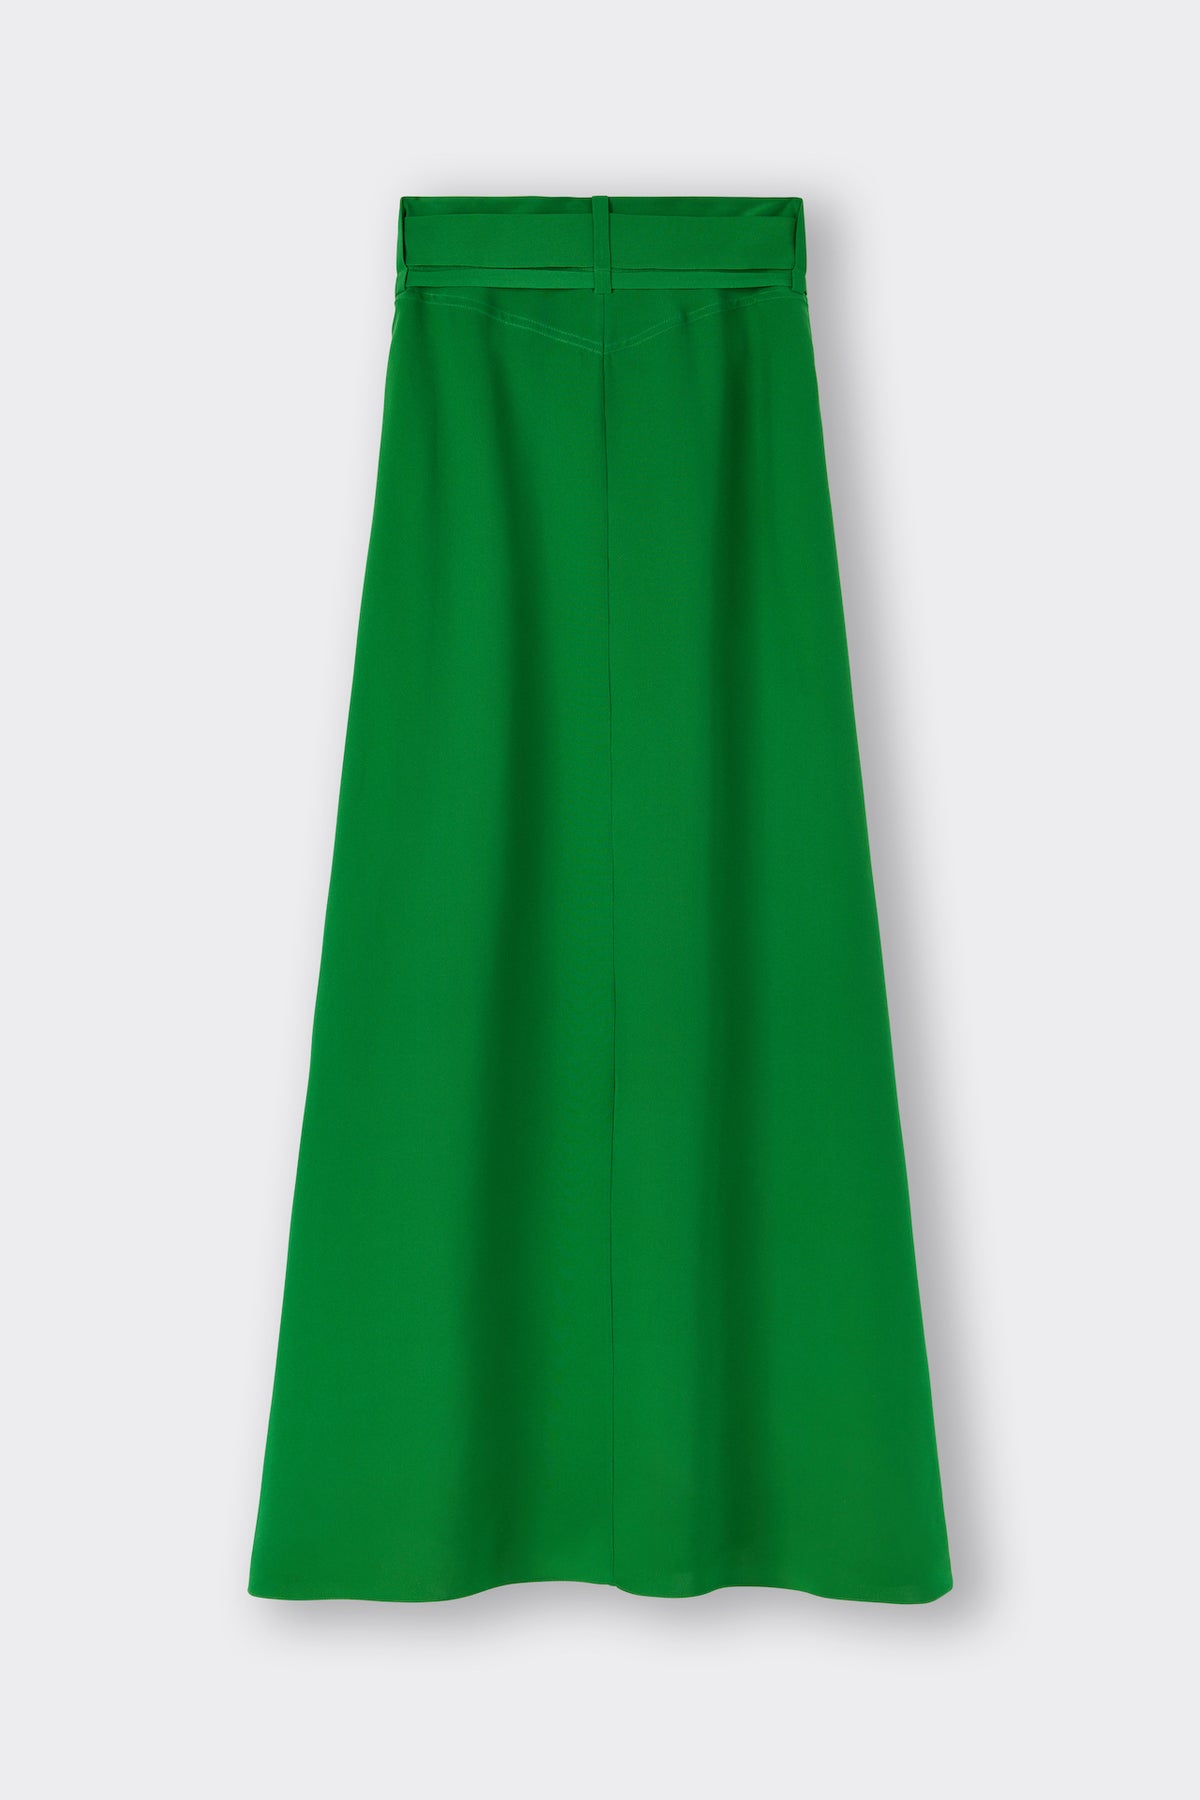 Warwick Skirt in Palm Green| Noon by Noor